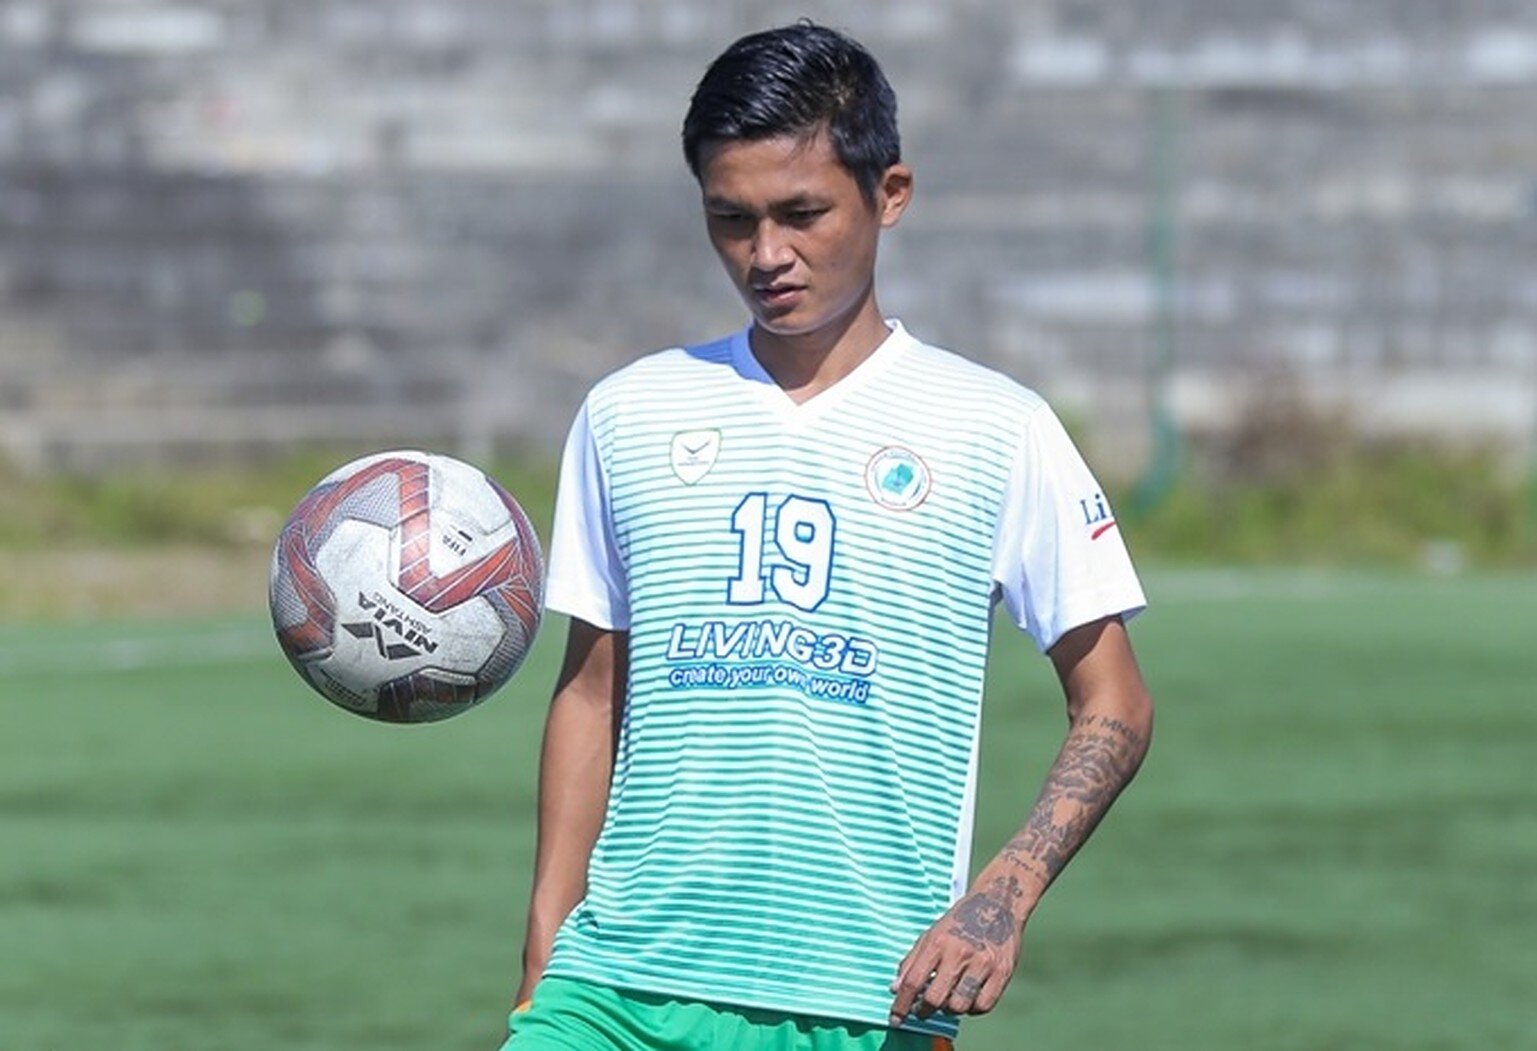 Siam Hanghal NEROCA FC